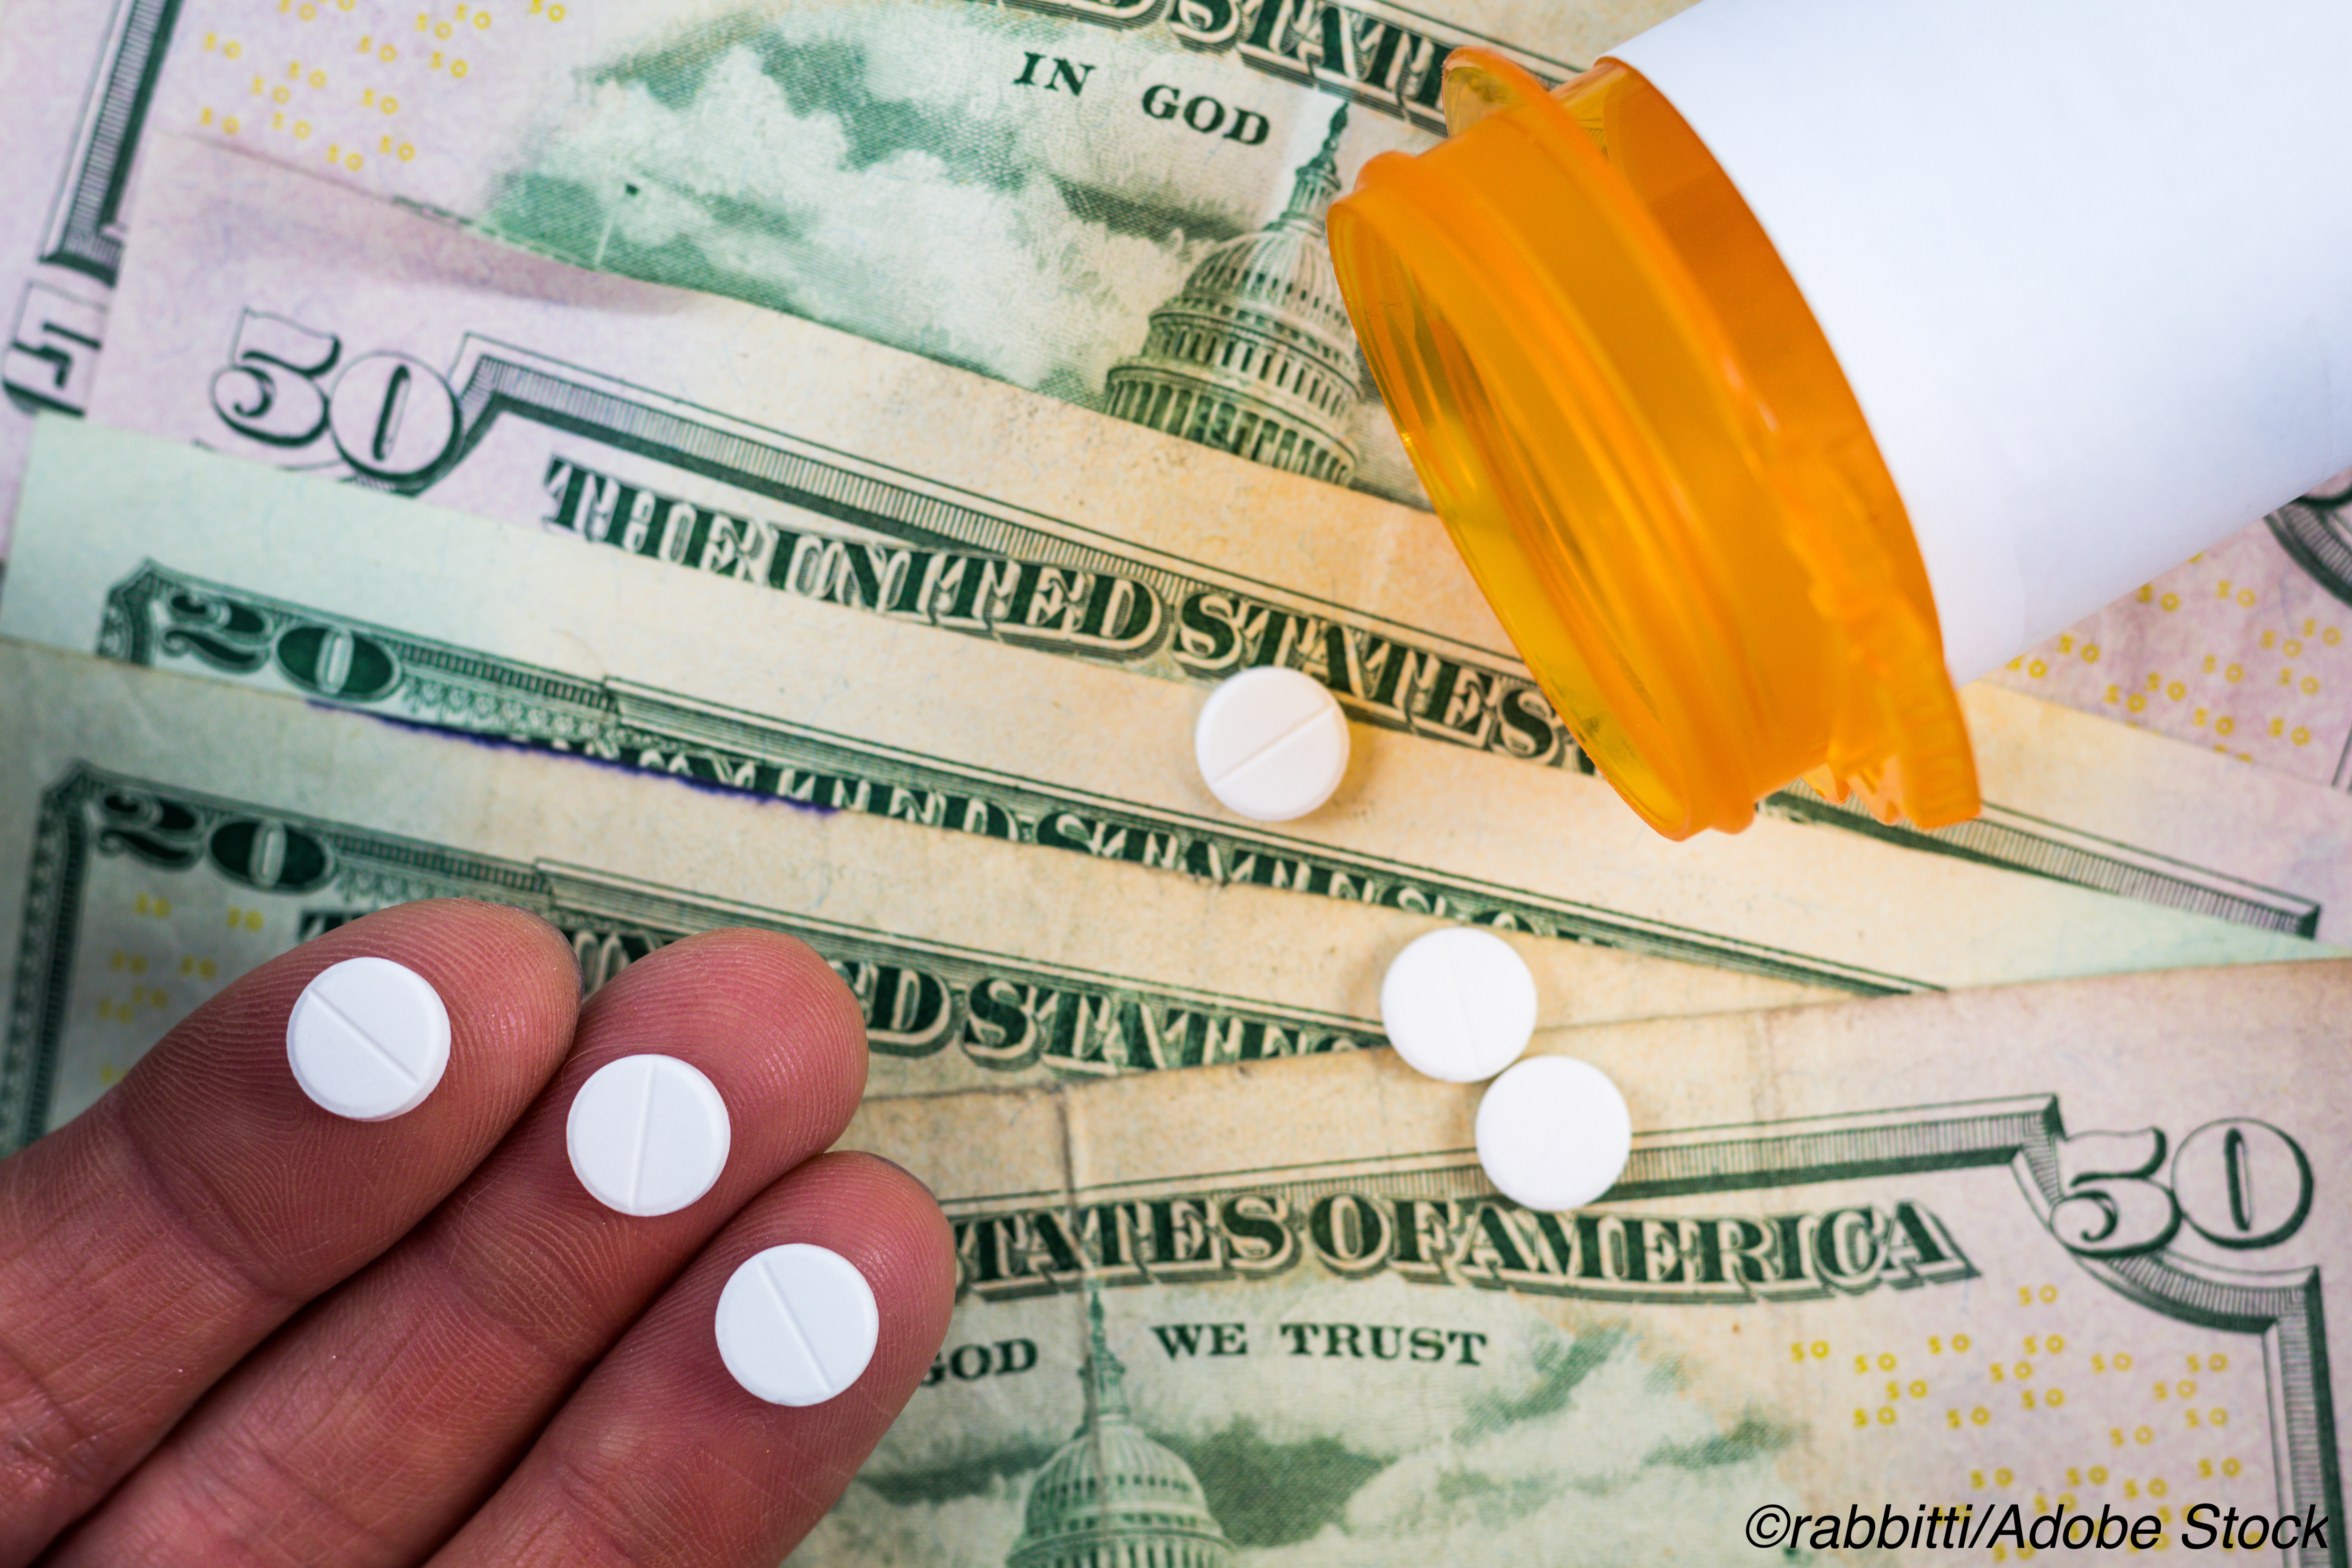 FDA Slams 17 Websites for Illegal Opioid Sales